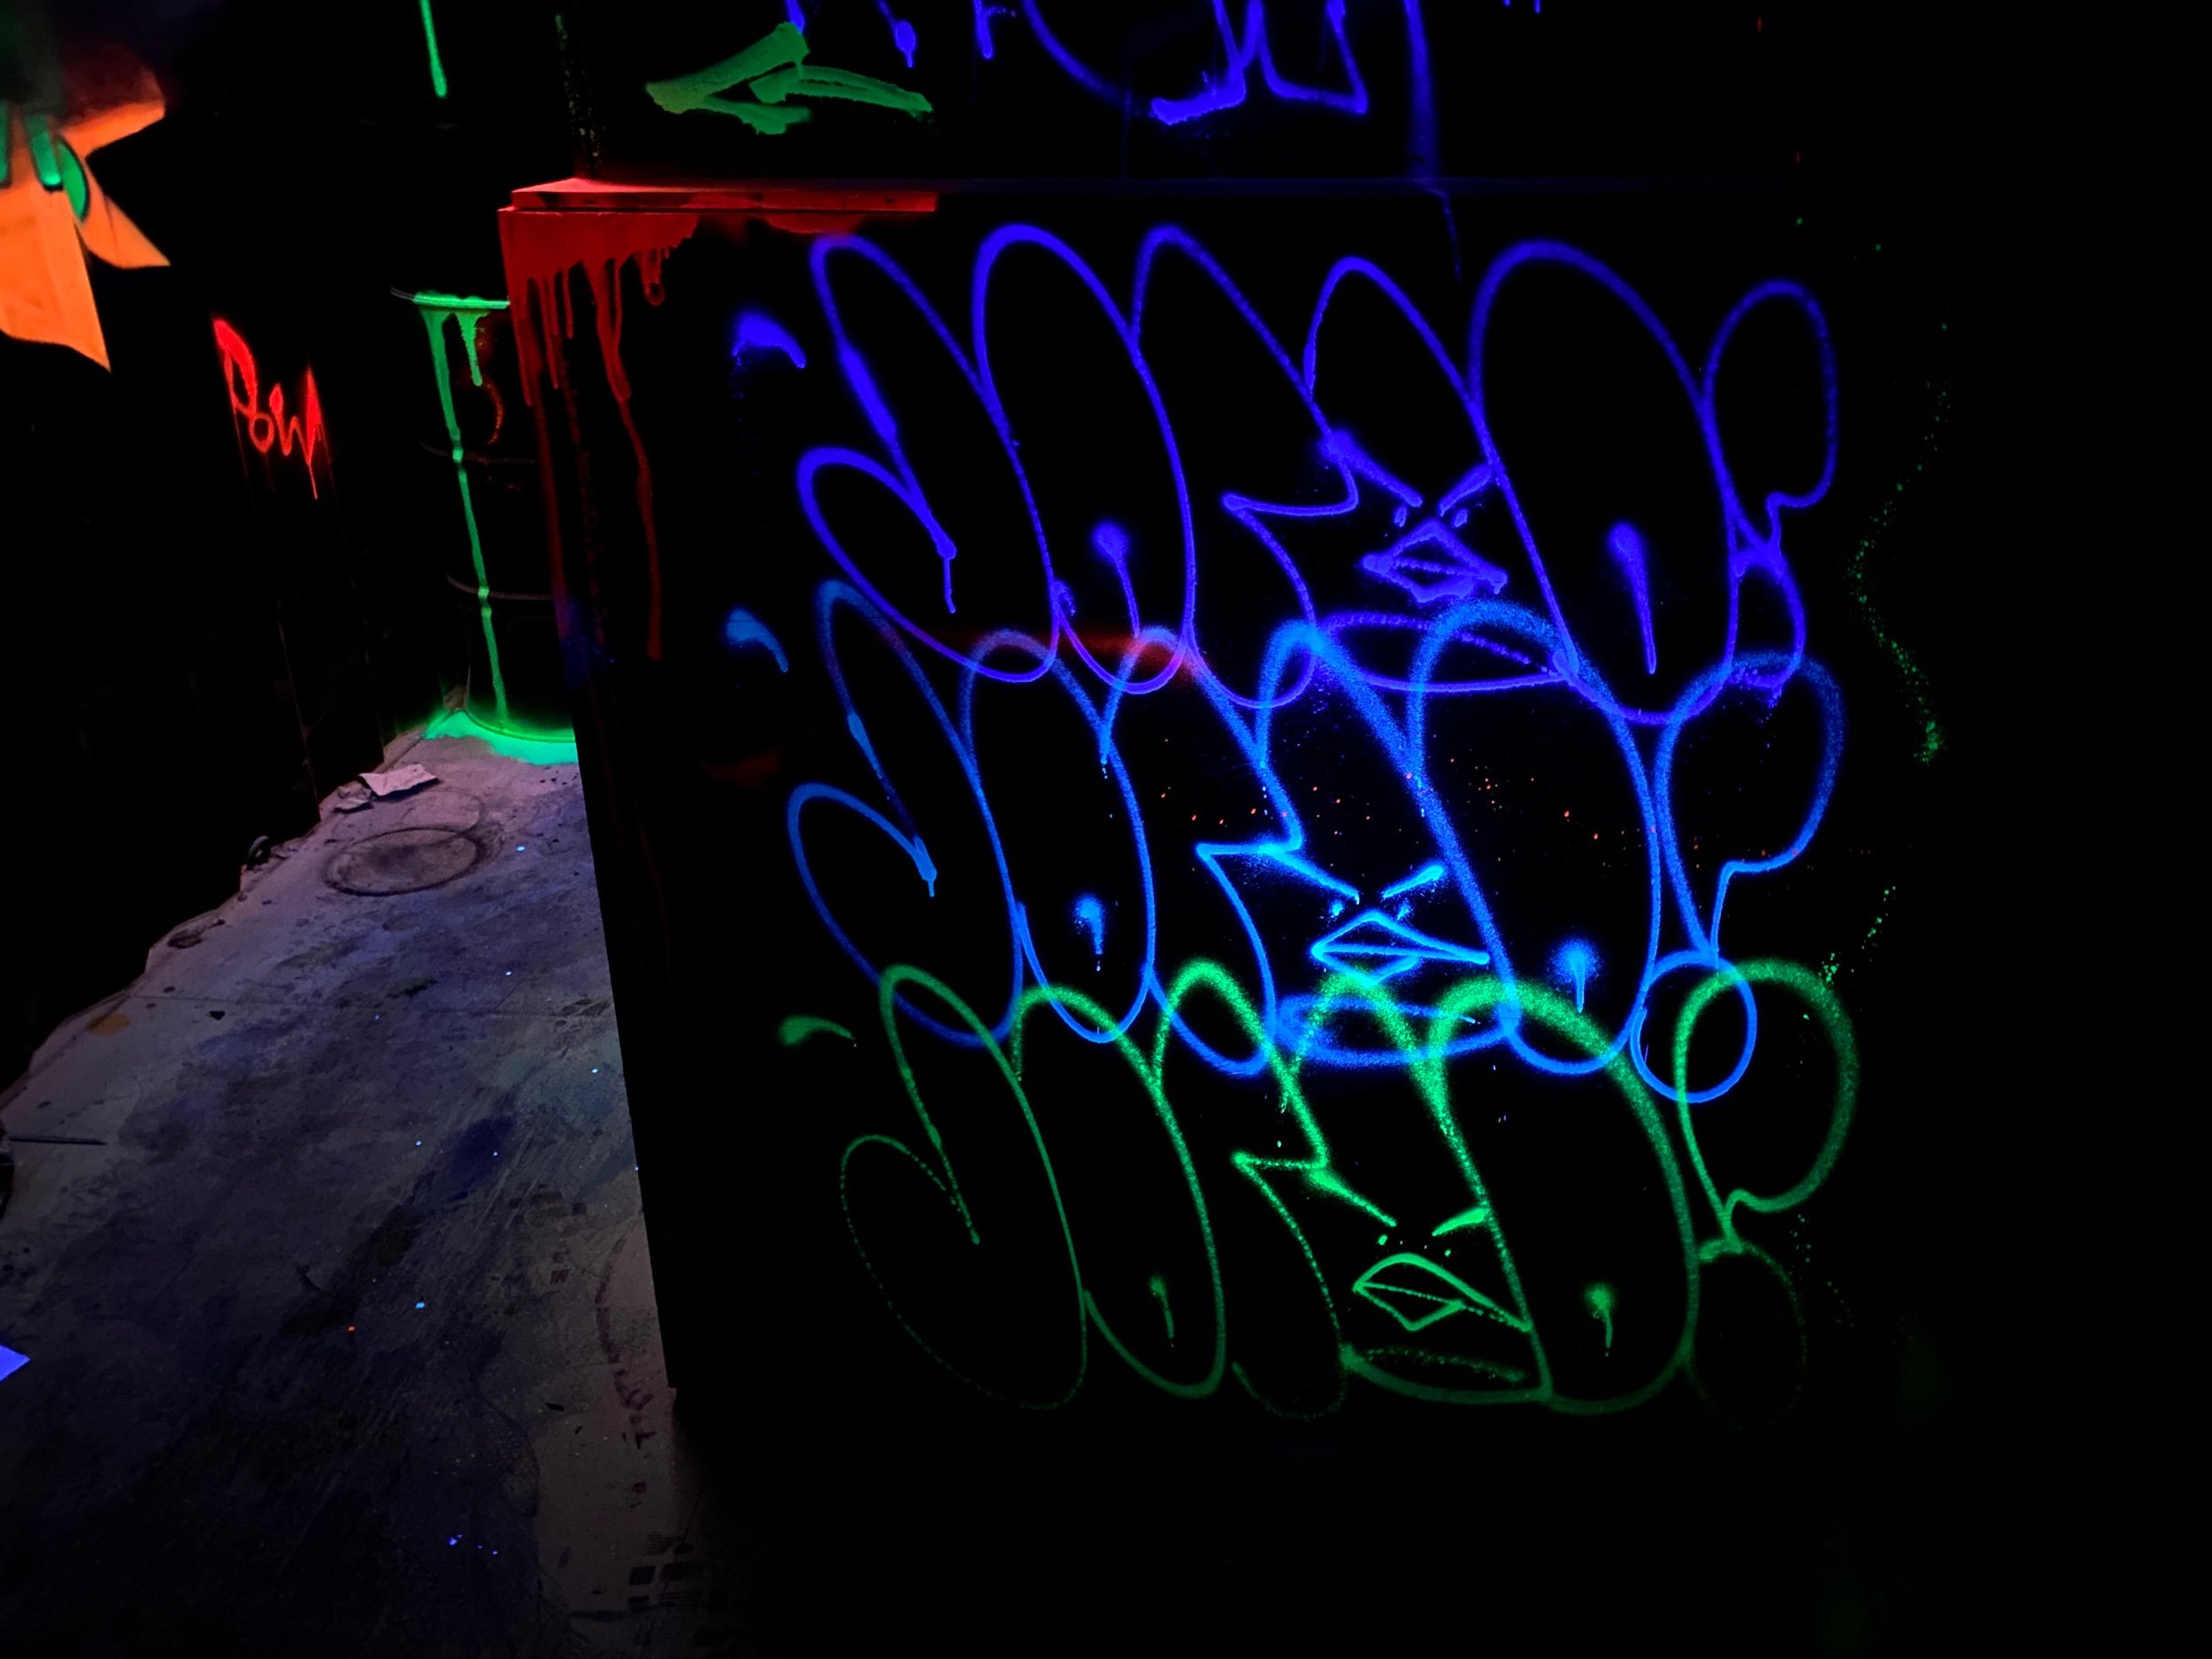 Graffiti - Neons